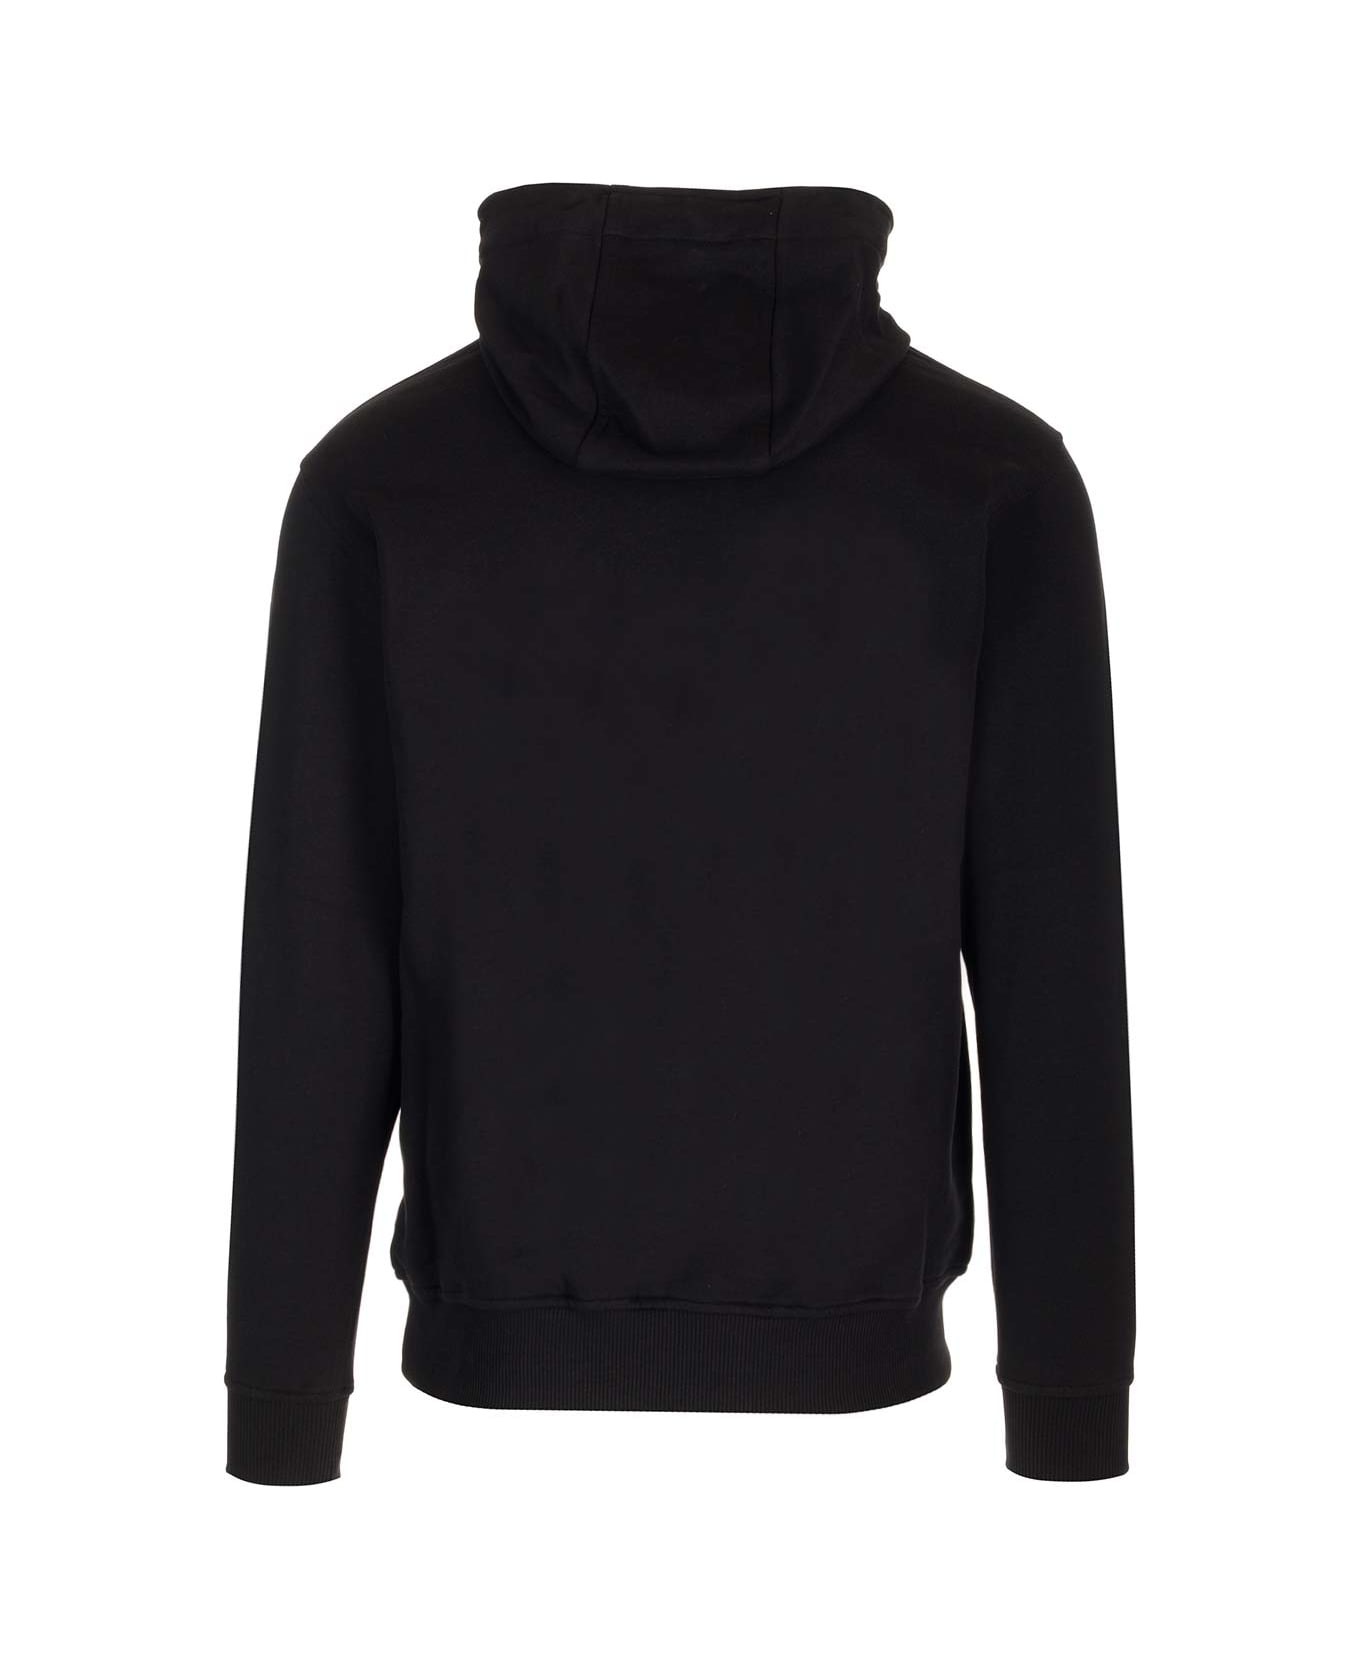 Comme des Garçons Shirt Hooded Sweatshirt - Black